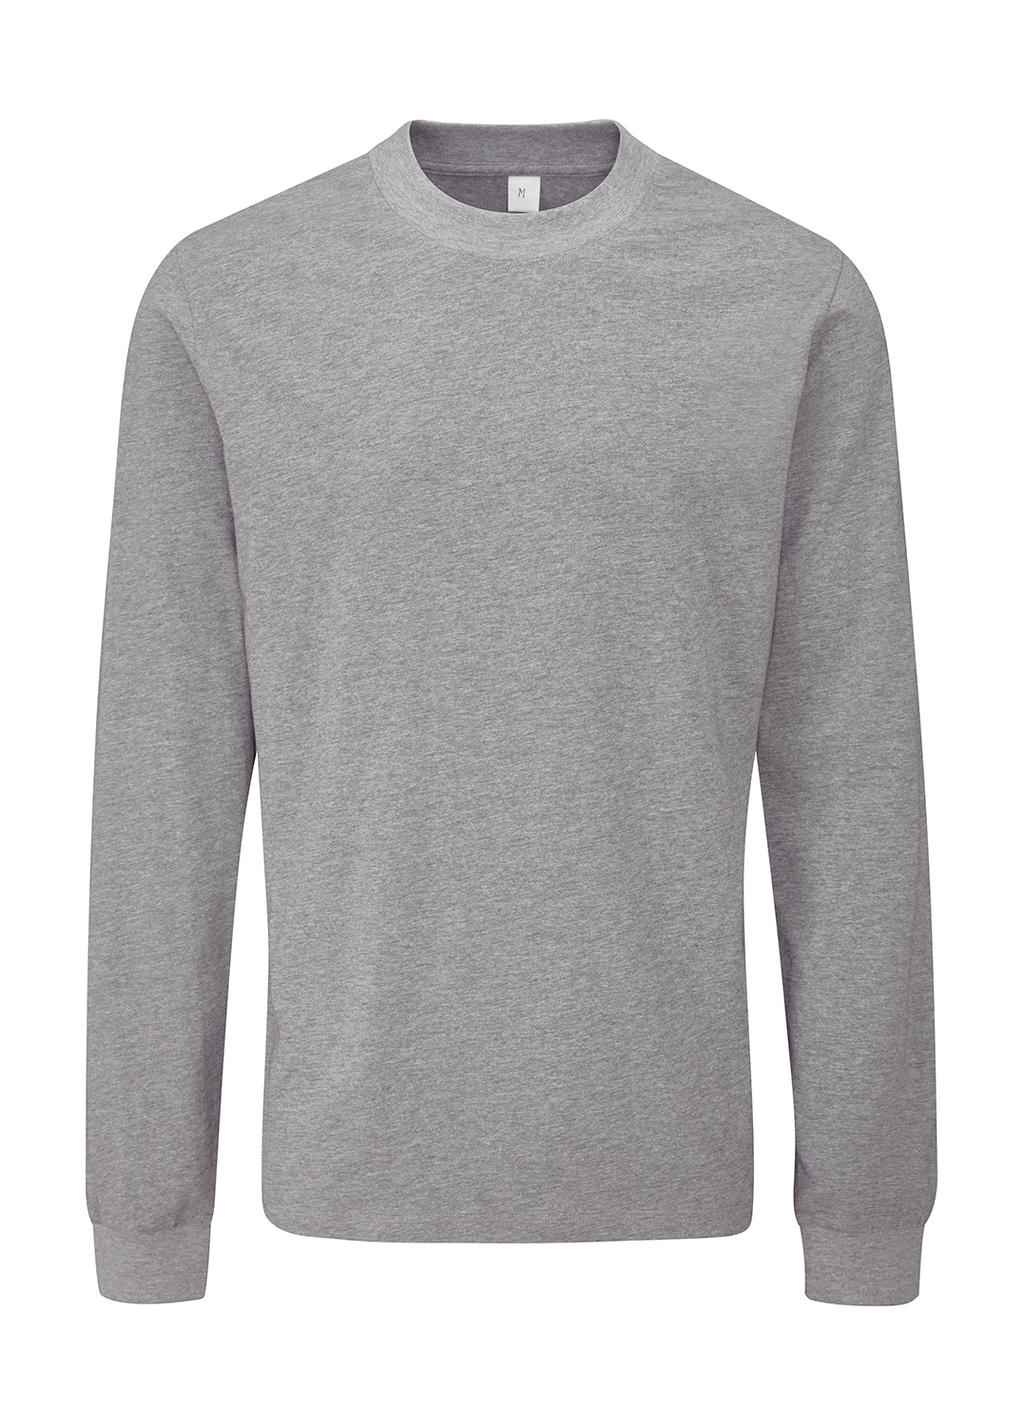 Hrubé tričko s dlhými rukávmi Essential - heather grey melange